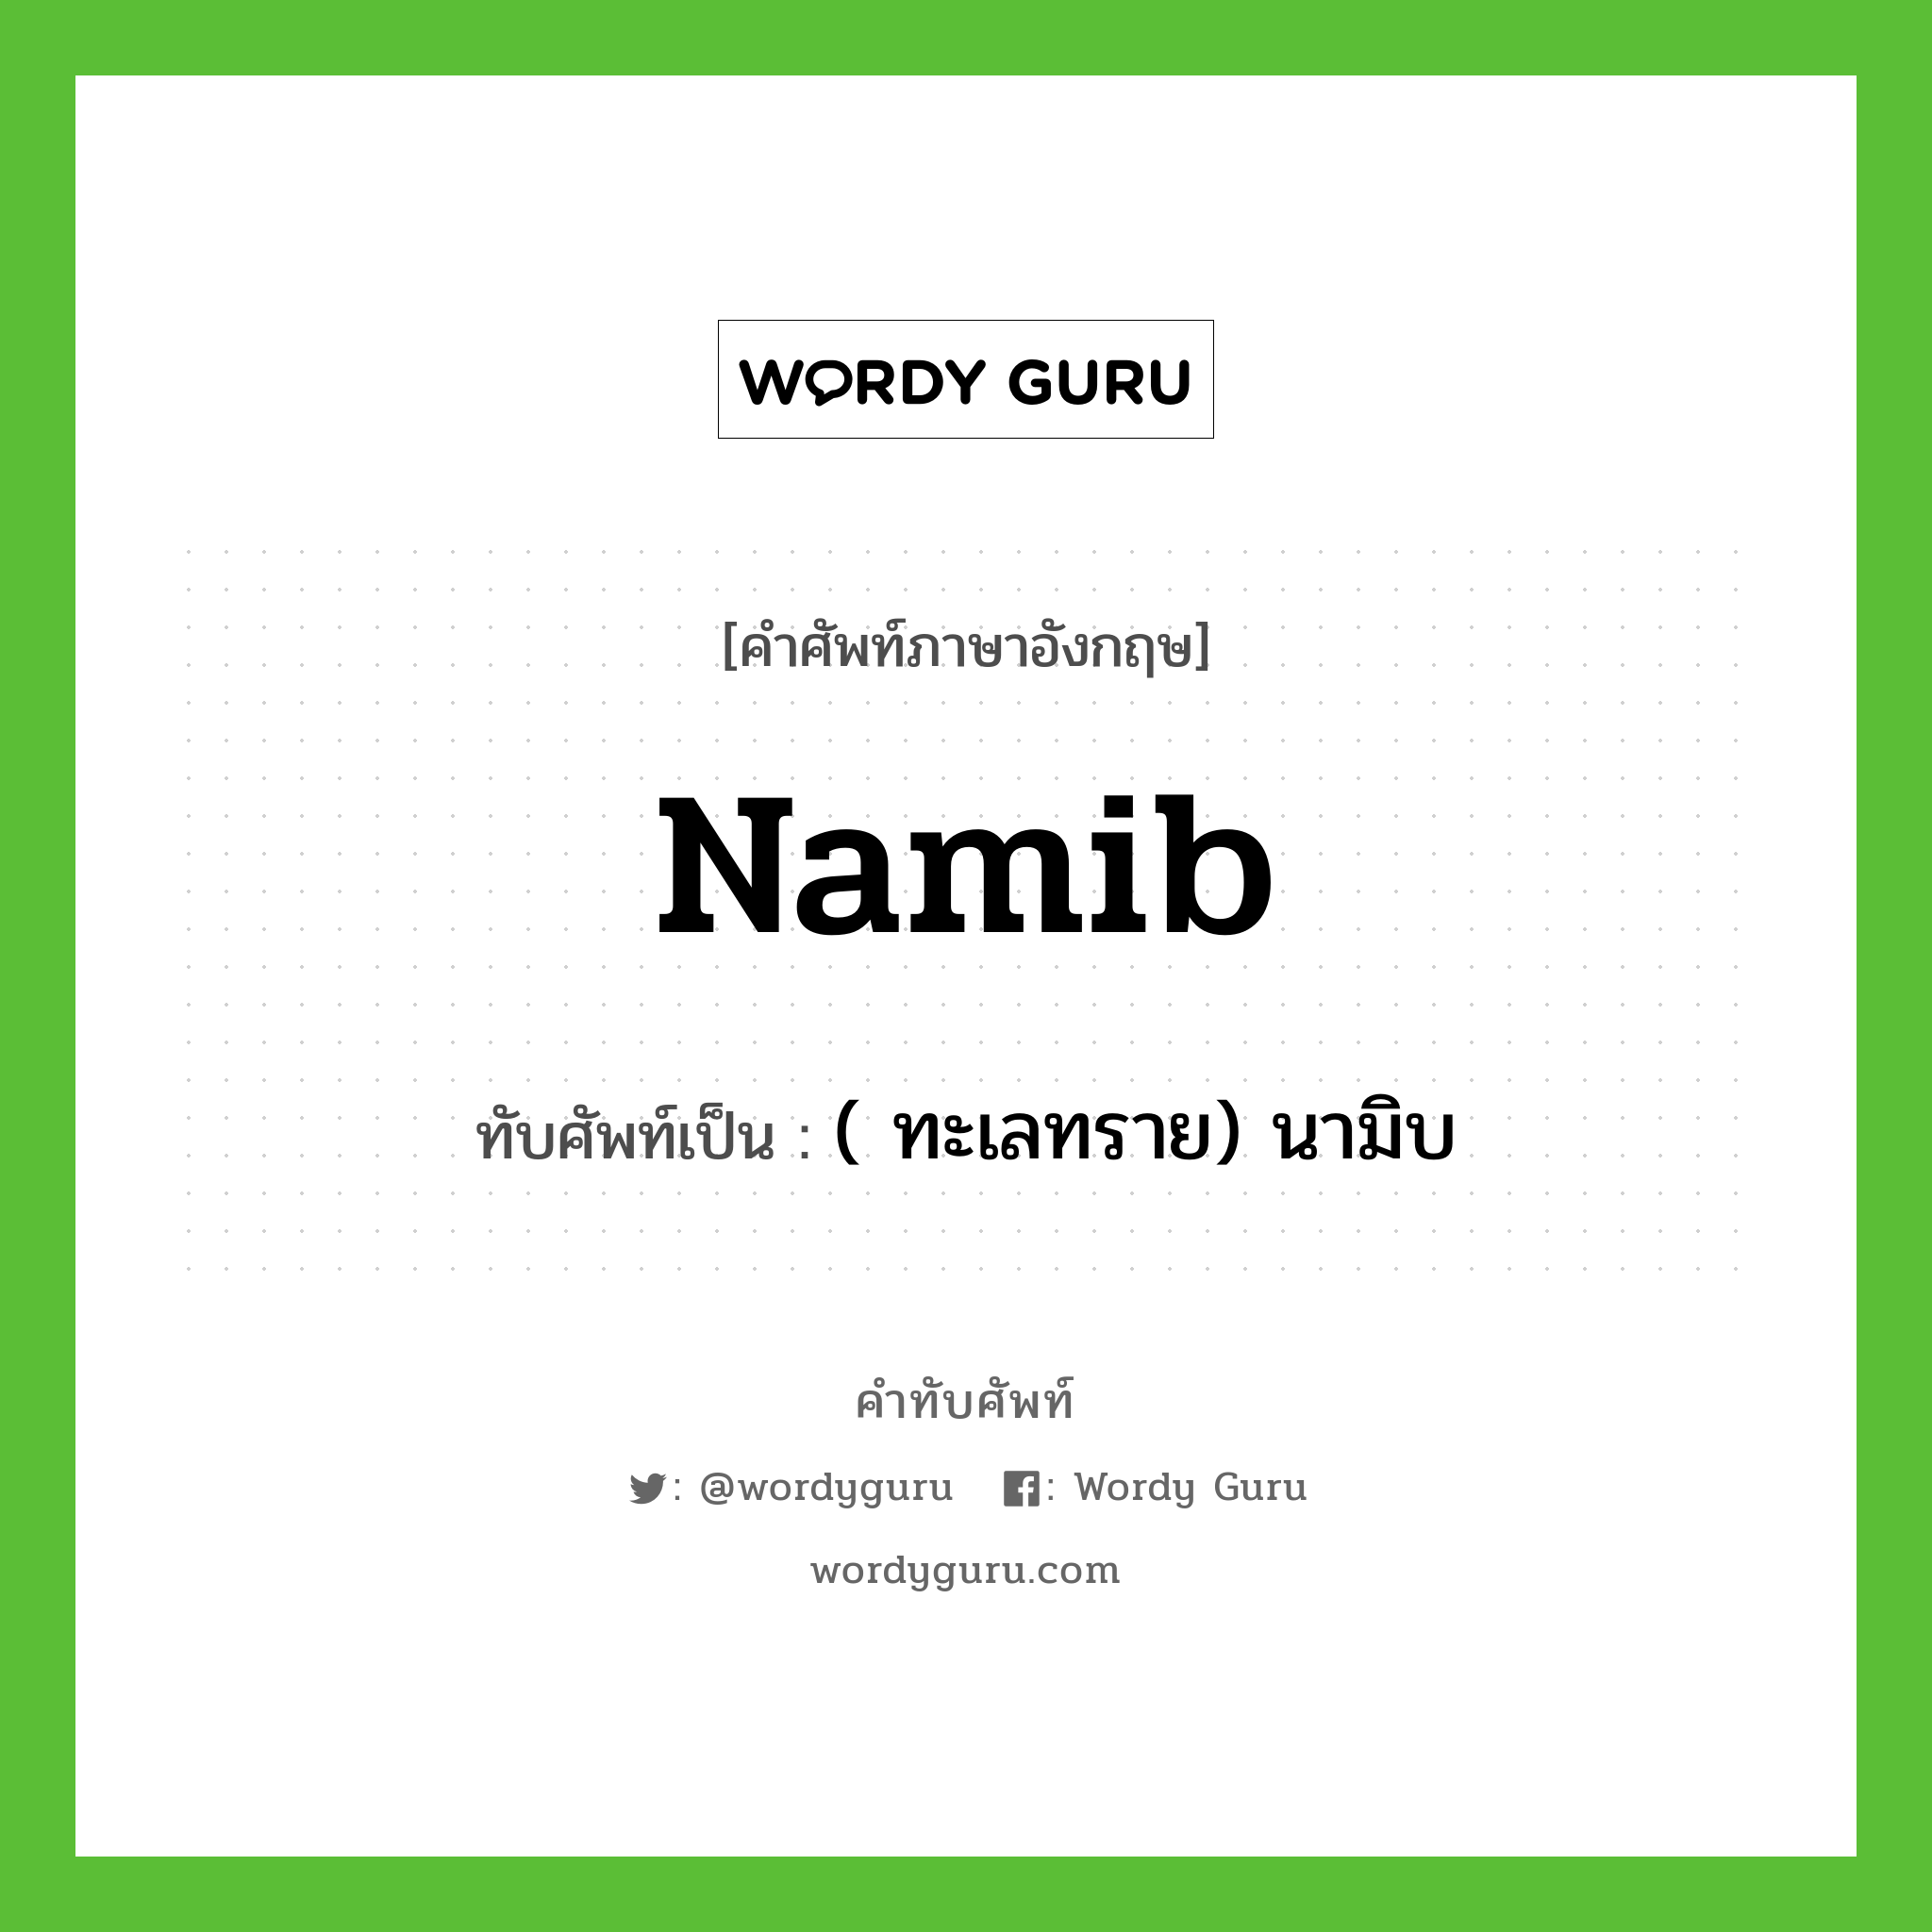 Namib เขียนเป็นคำไทยว่าอะไร?, คำศัพท์ภาษาอังกฤษ Namib ทับศัพท์เป็น ( ทะเลทราย) นามิบ